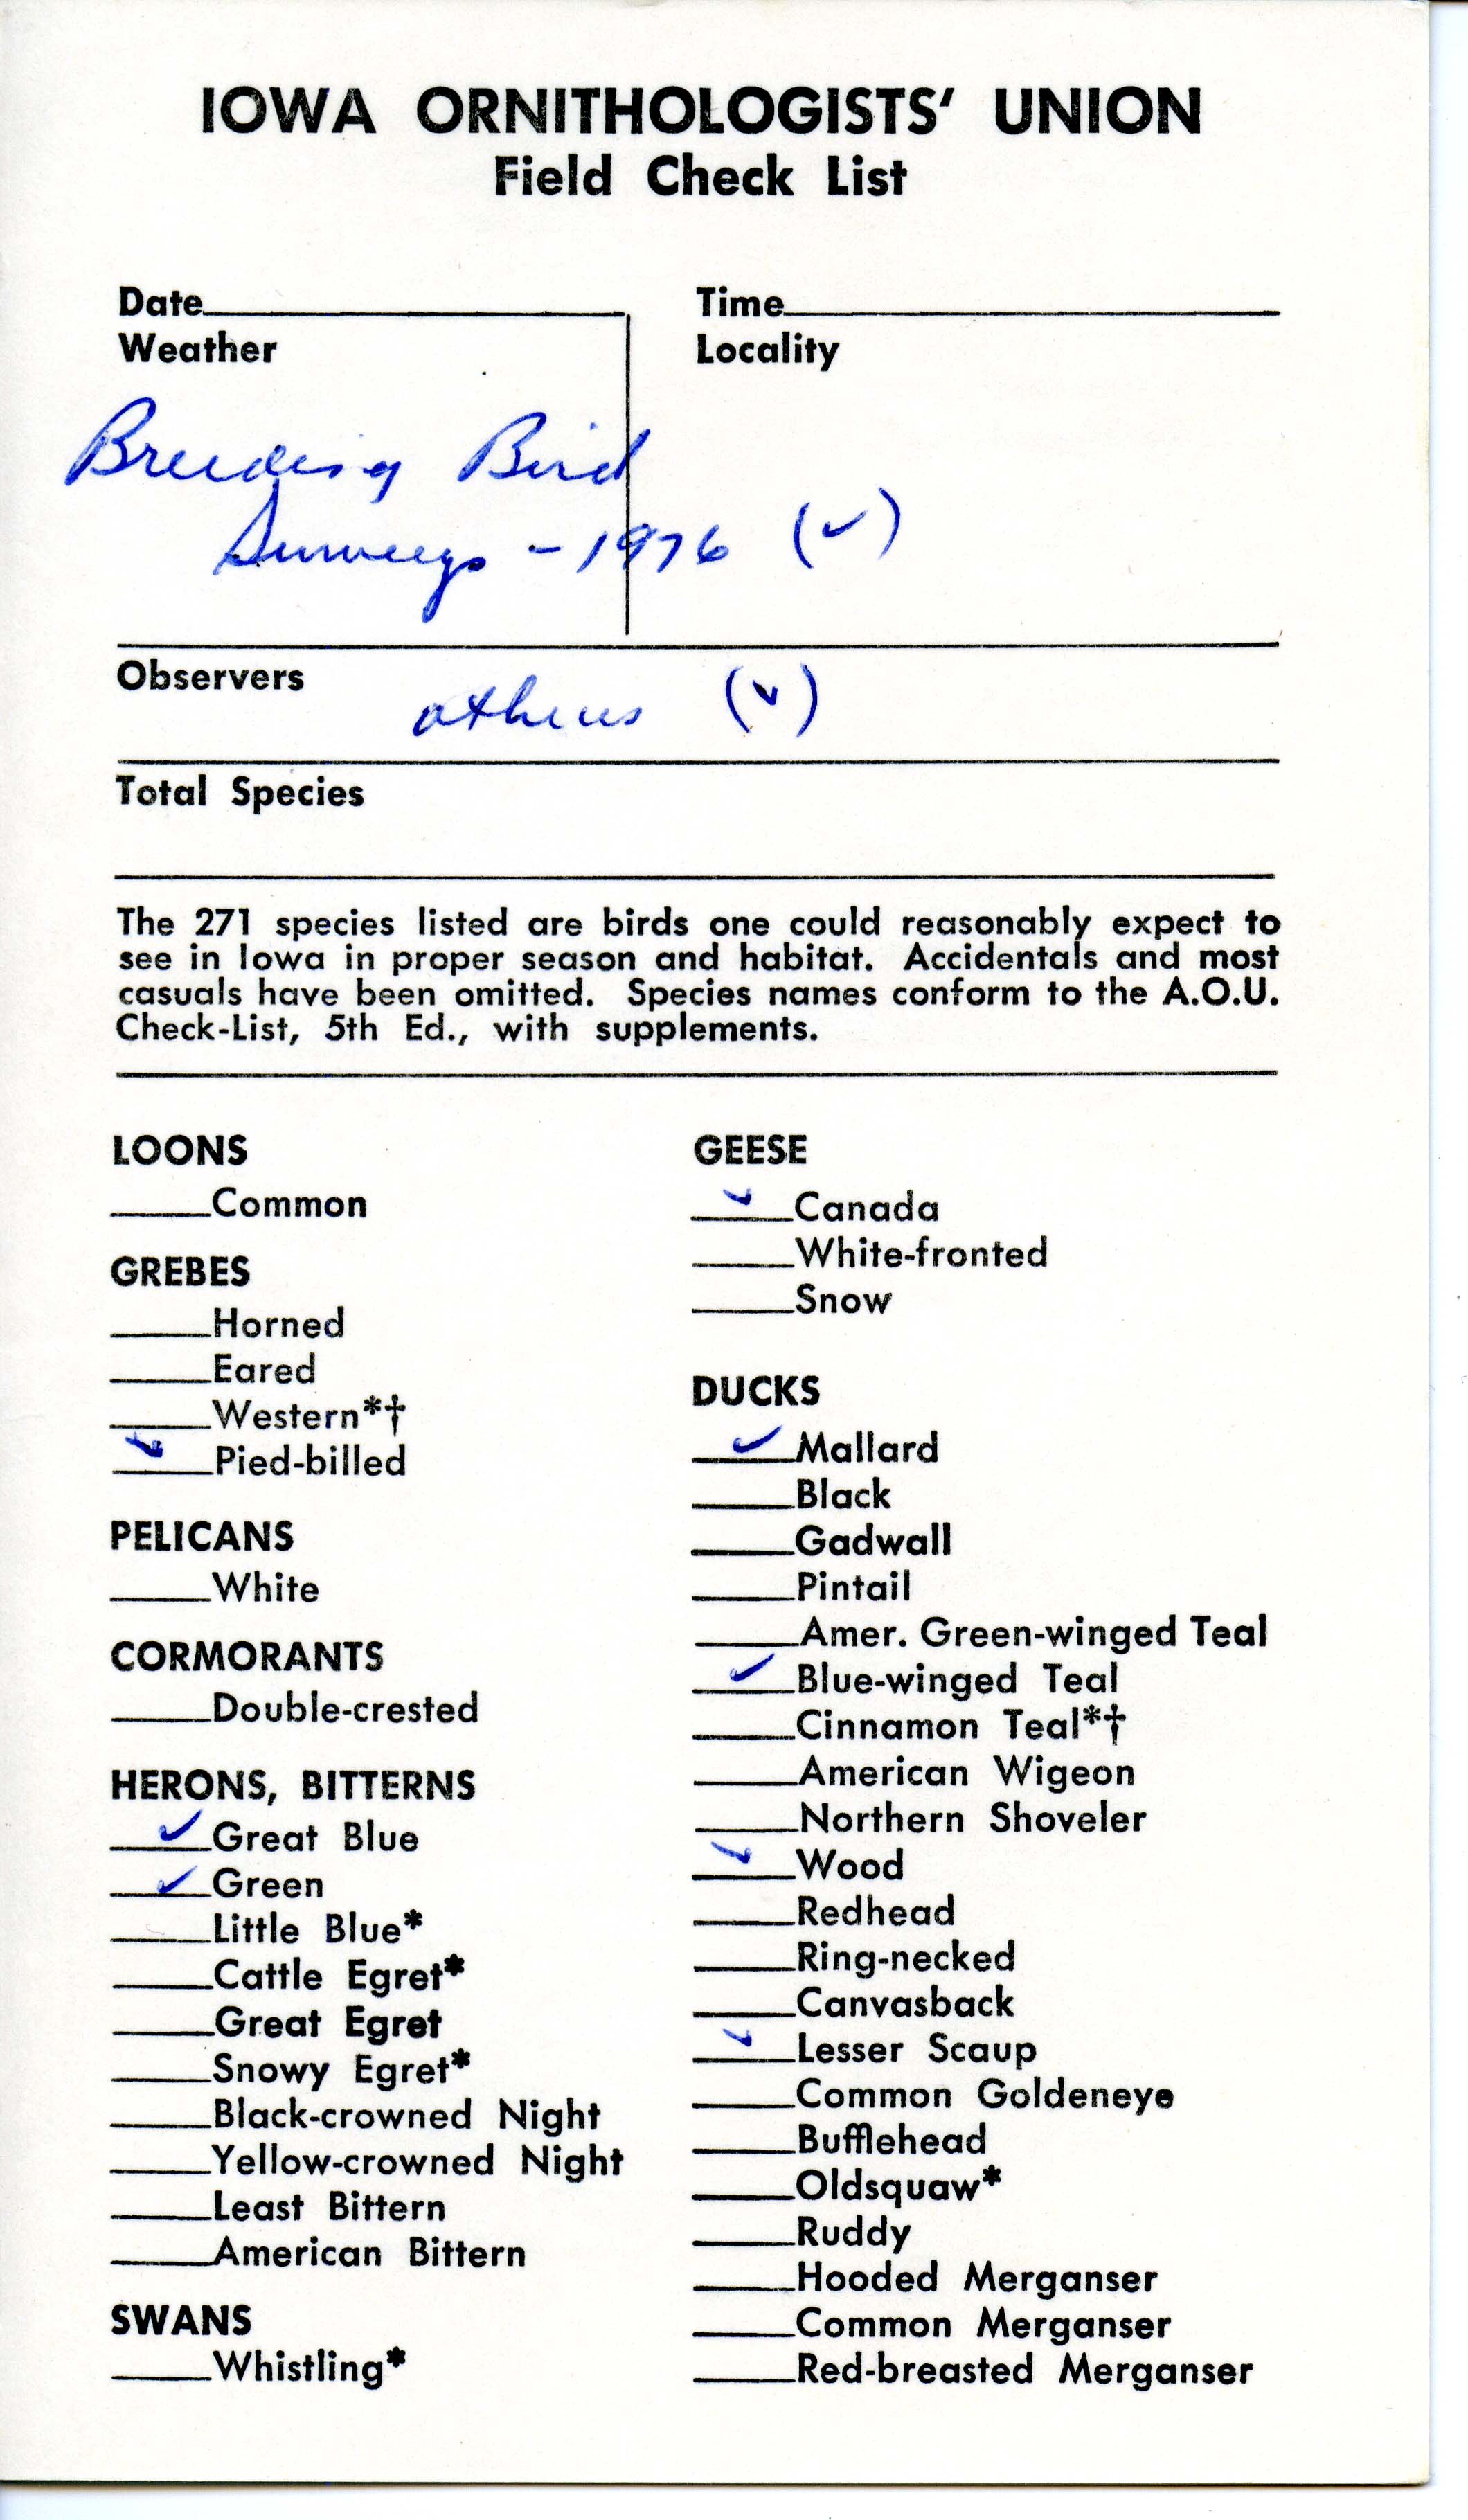 Breeding bird survey, 1976